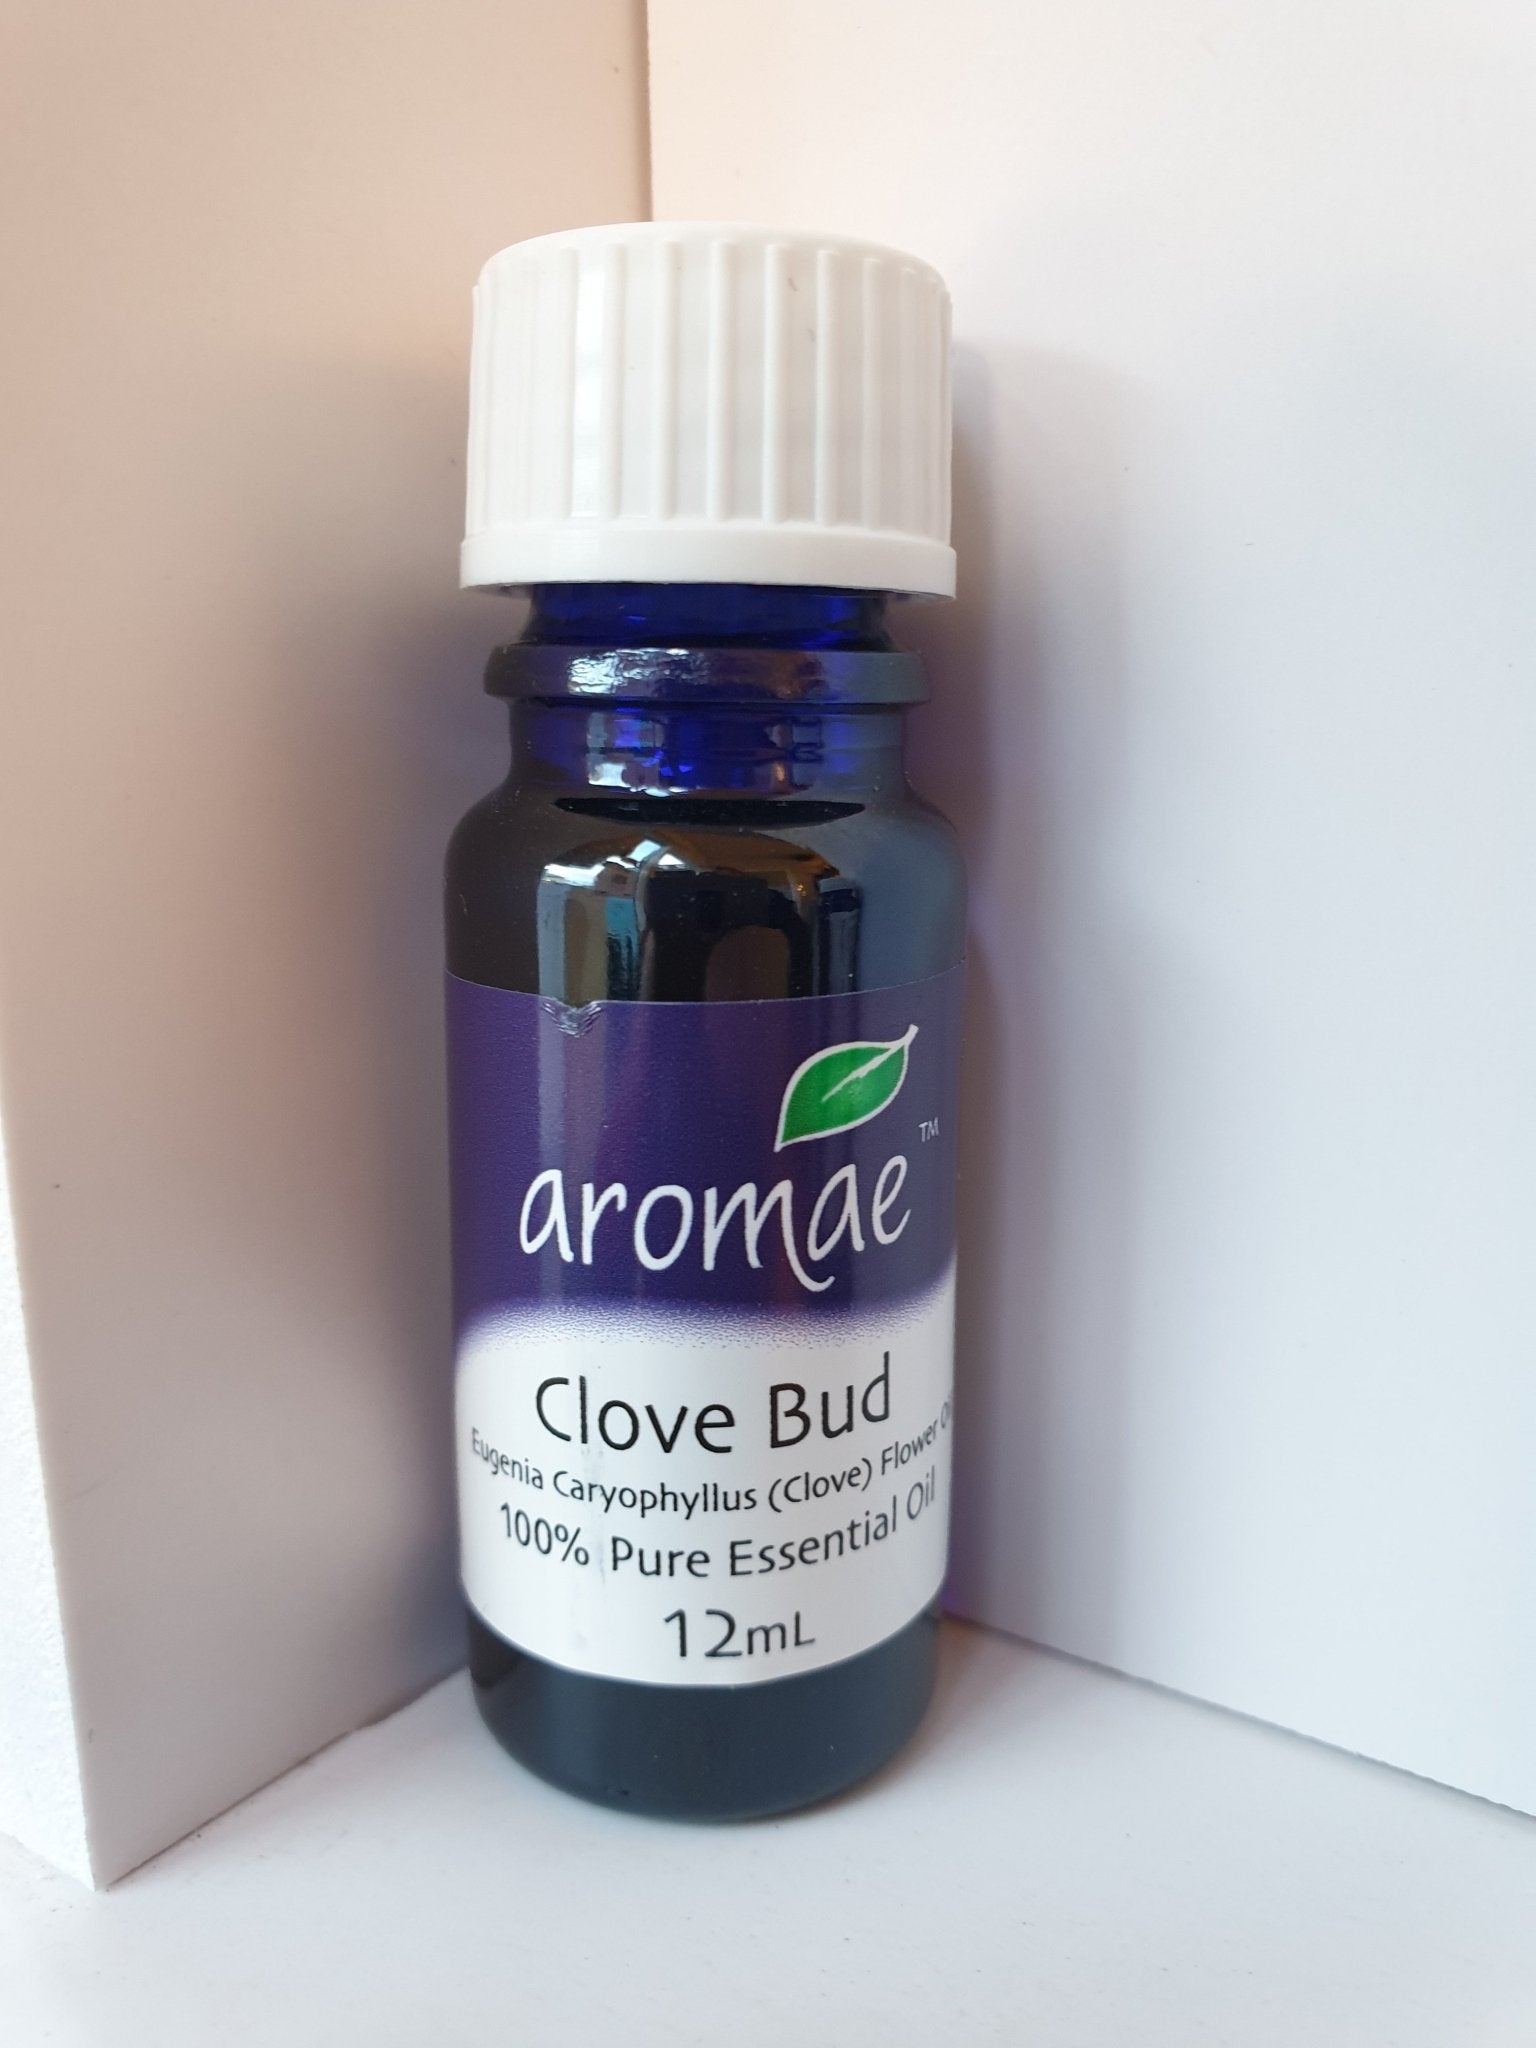 Aromae Clove Bud Essential Oil 12 ml